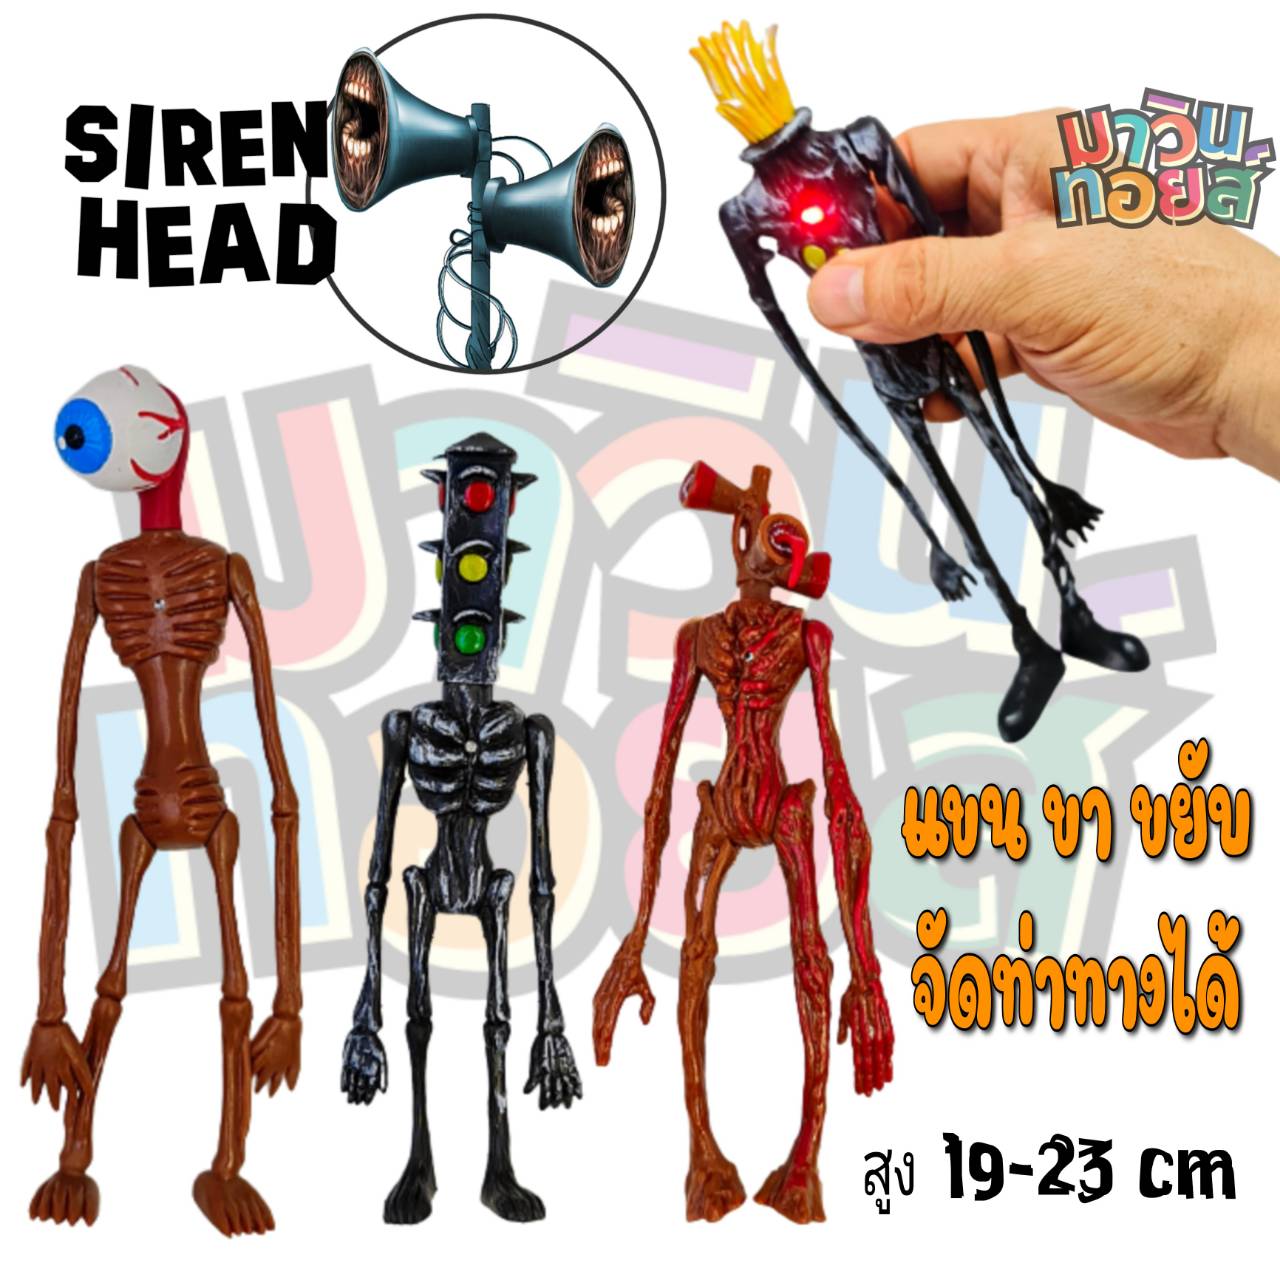 siren head ไซเรน เฮด action figures 4 ตัว มี แสง WINNIETOYS